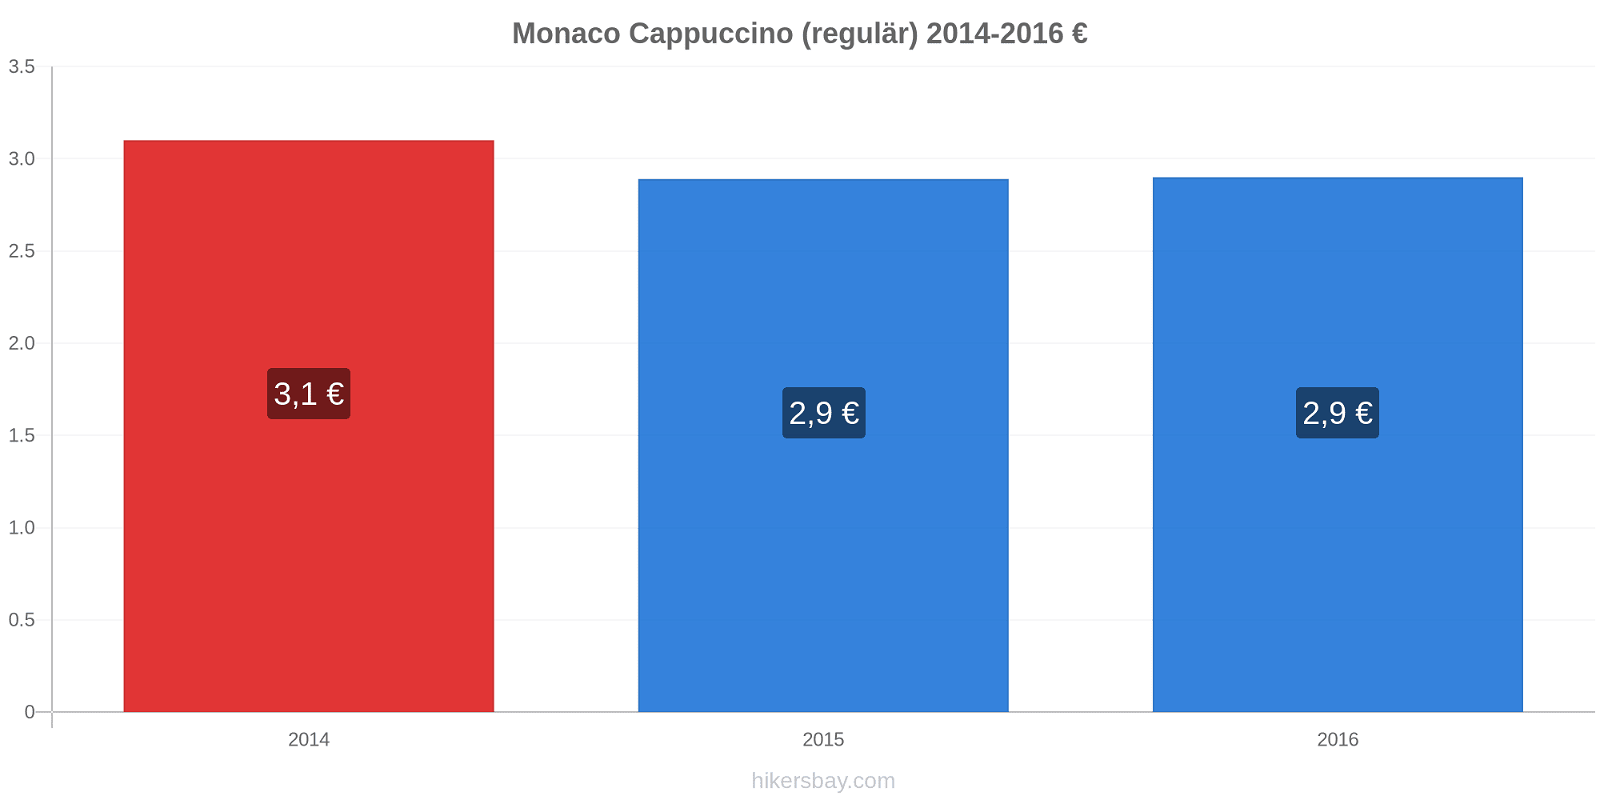 Monaco Preisänderungen Cappuccino (regulär) hikersbay.com